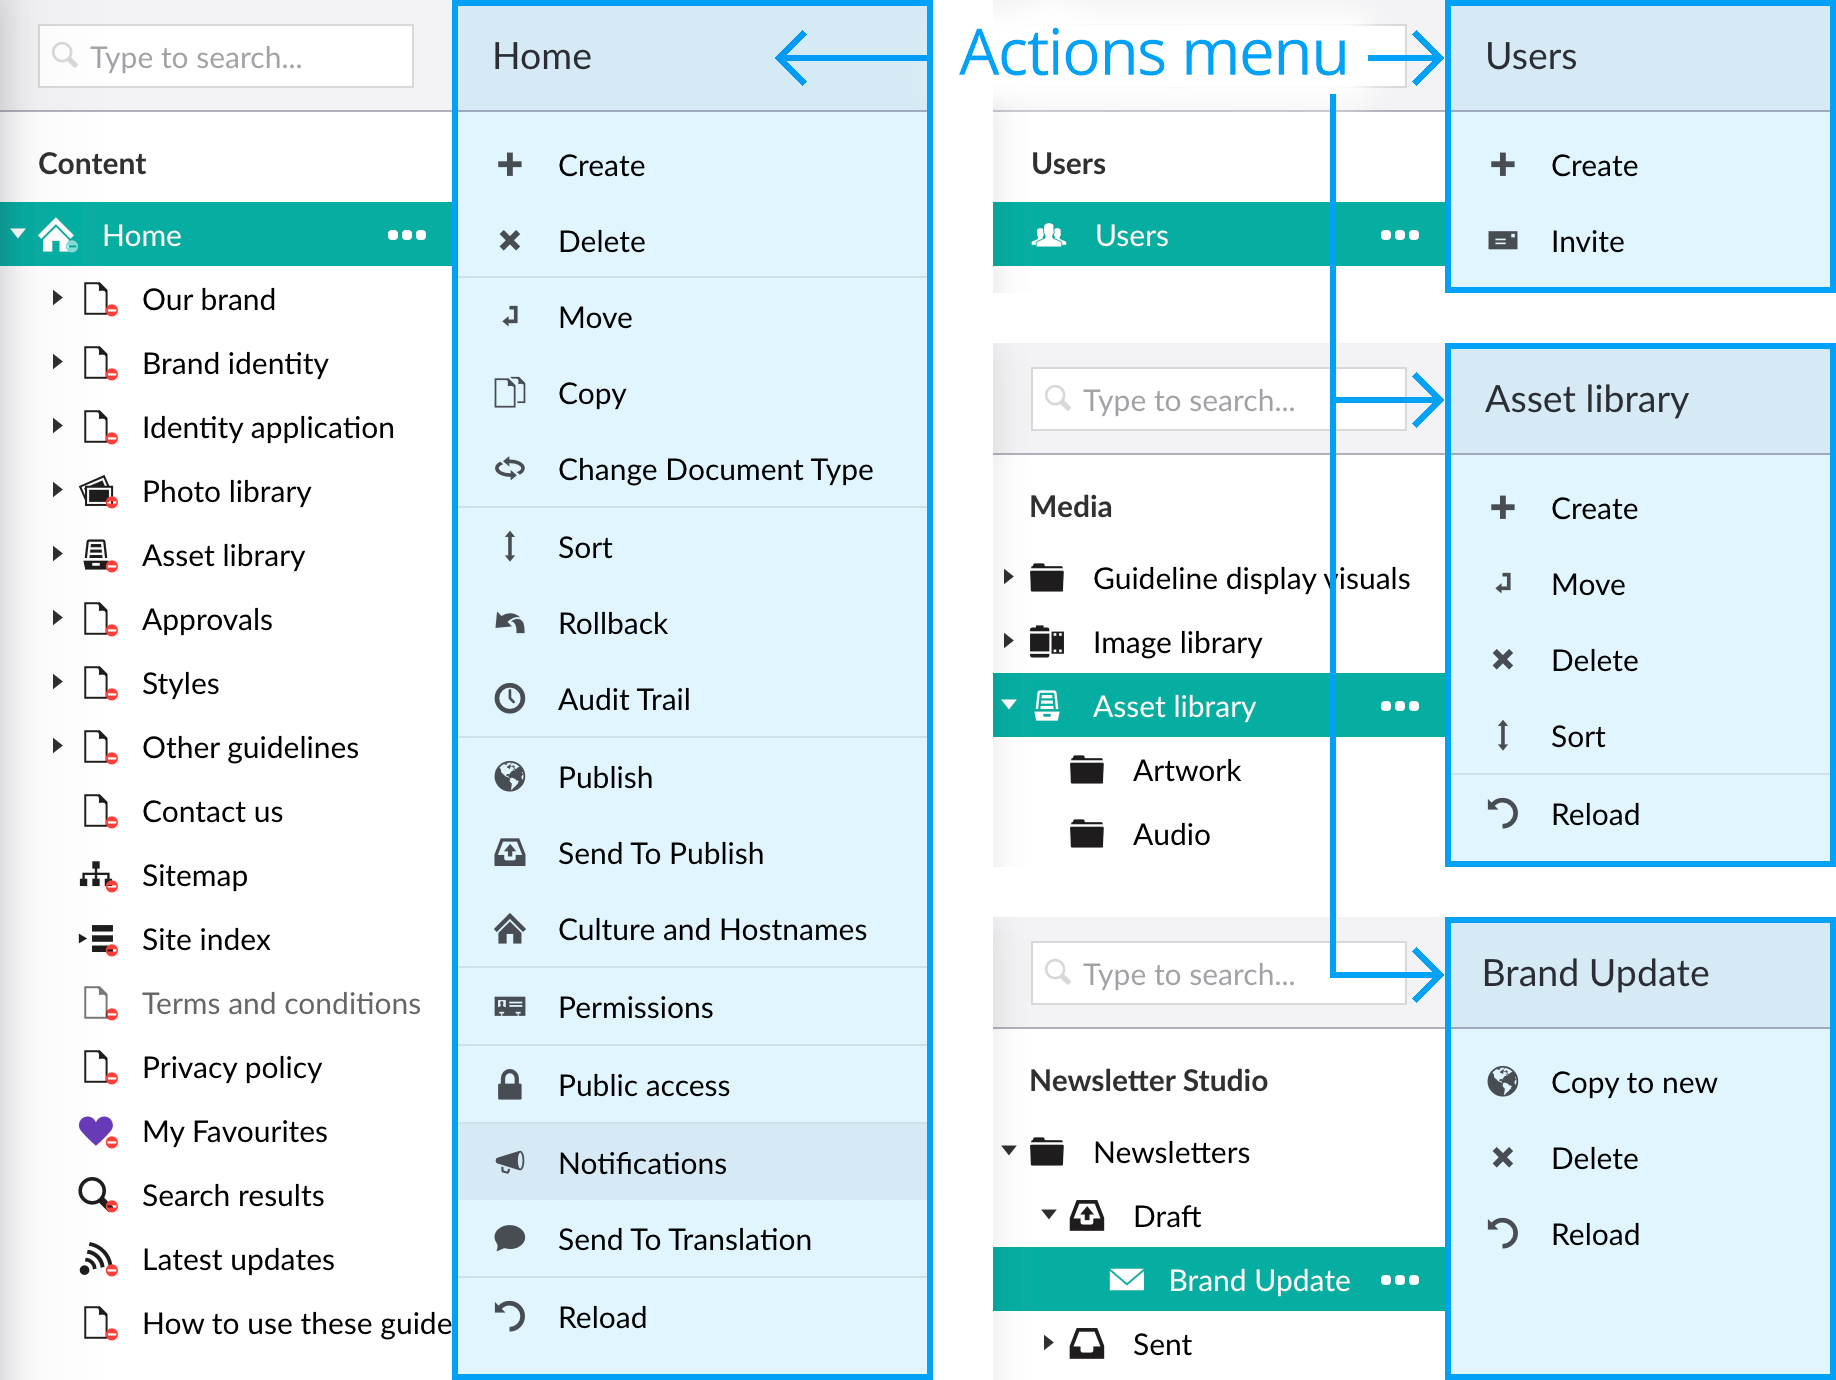 Actions menu examples